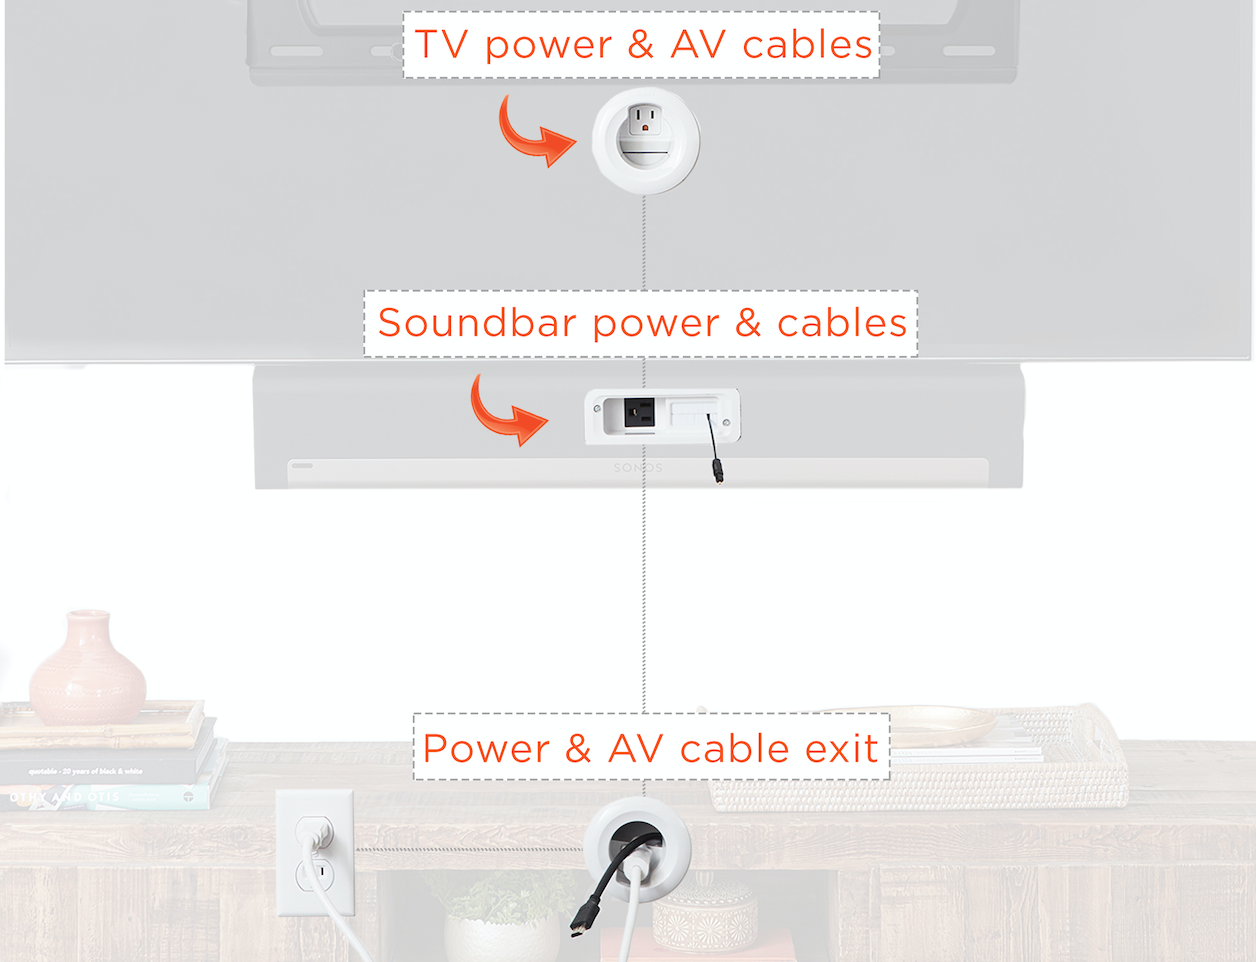 cable management solutions for soundbar